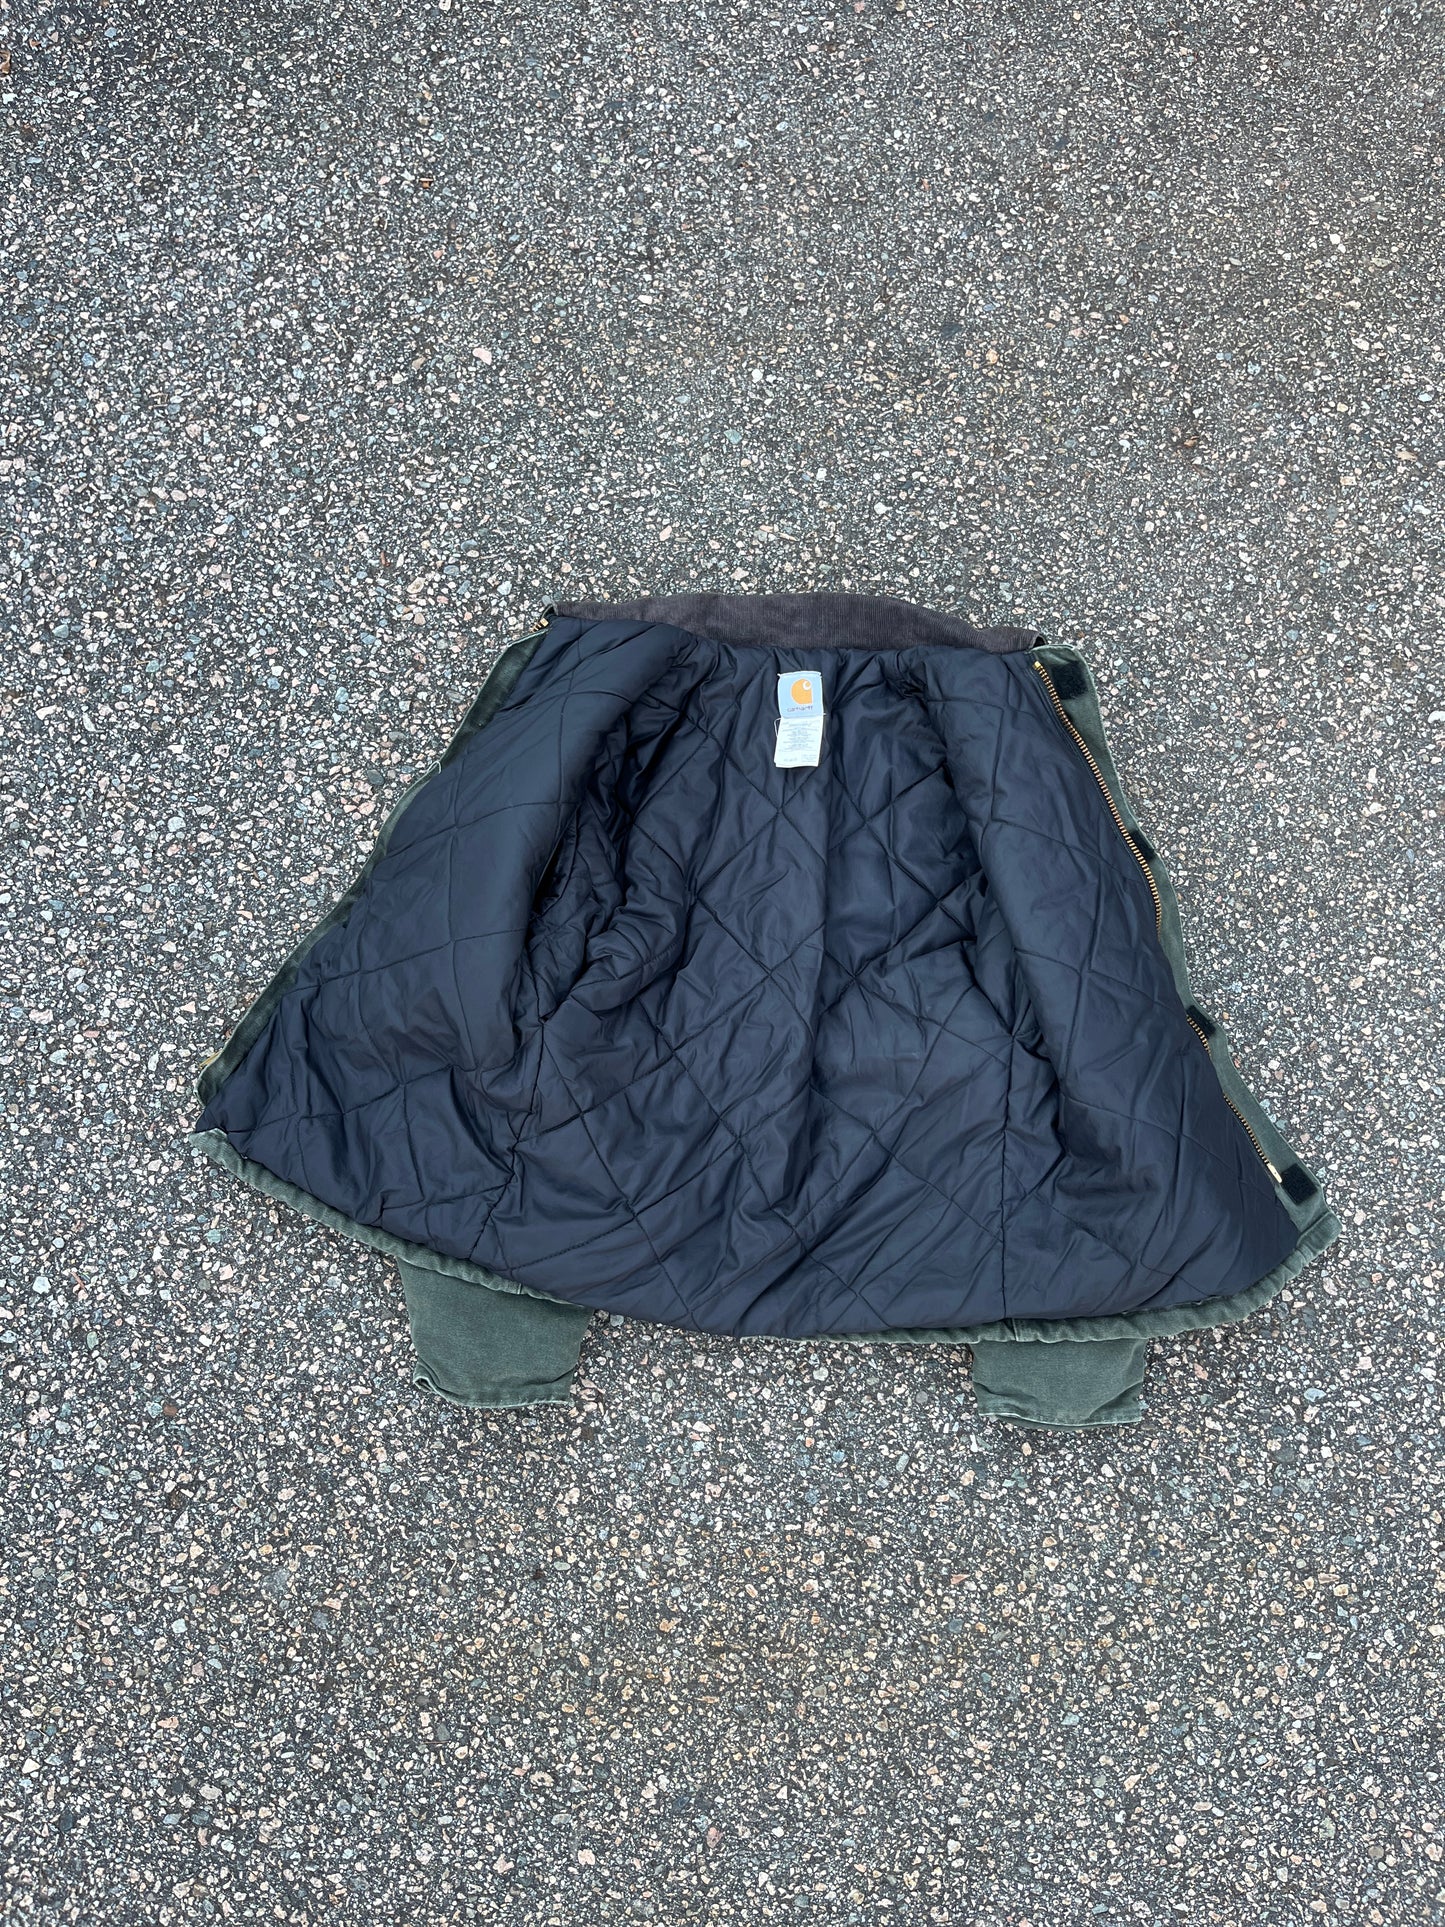 Faded Olive Green Carhartt Arctic Jacket - Small